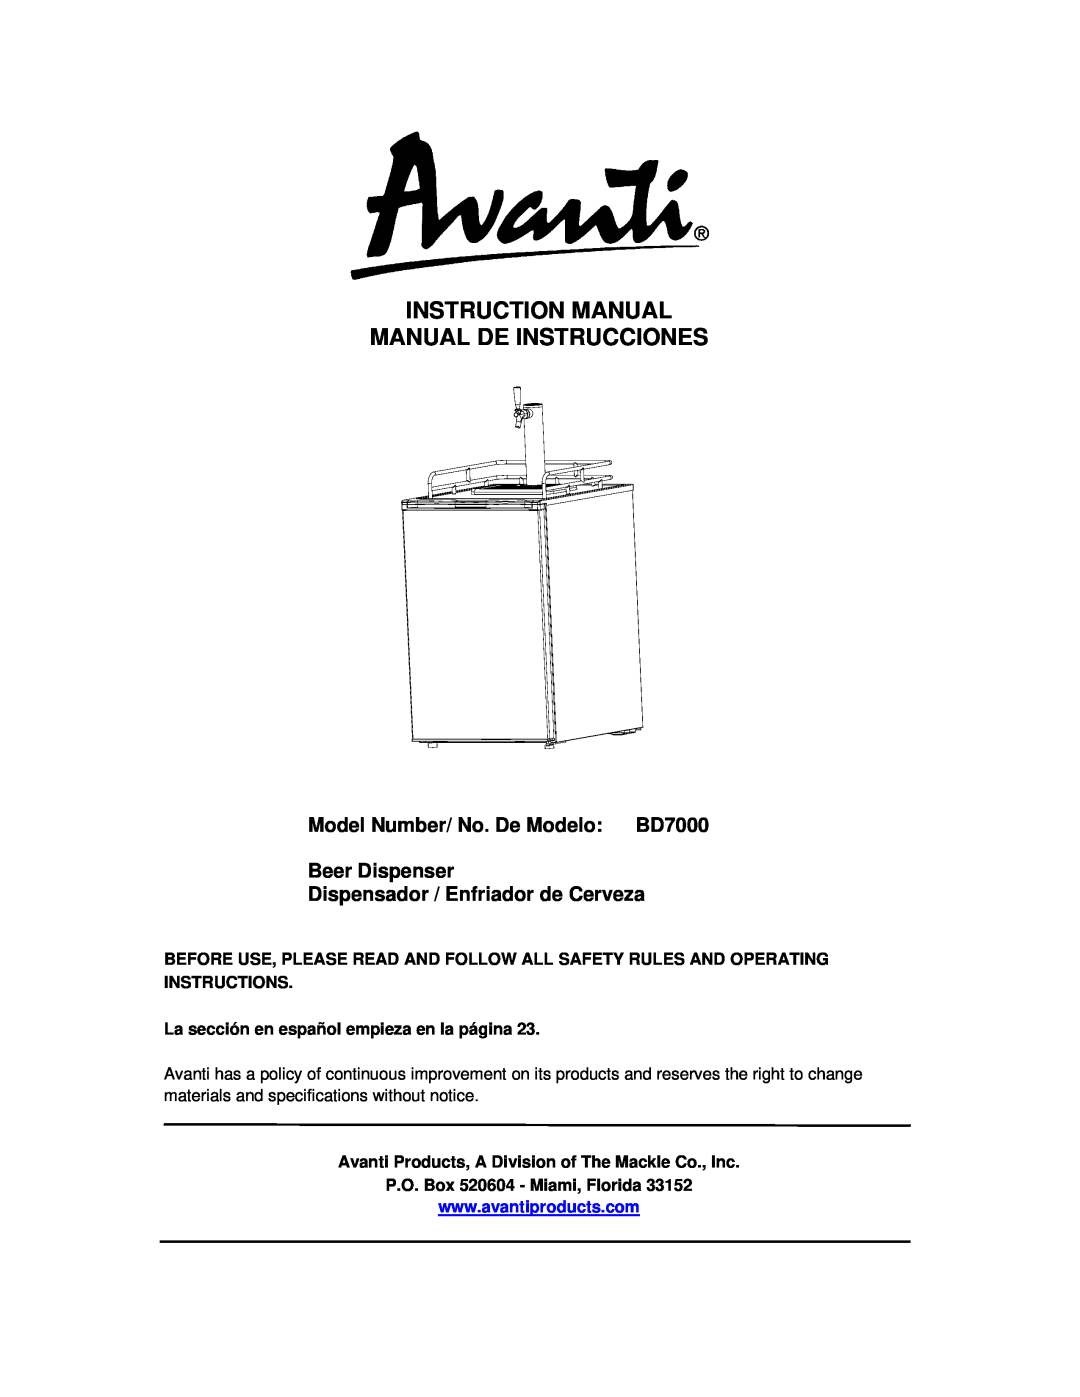 Avanti instruction manual Model Number/ No. De Modelo BD7000, Beer Dispenser Dispensador / Enfriador de Cerveza 